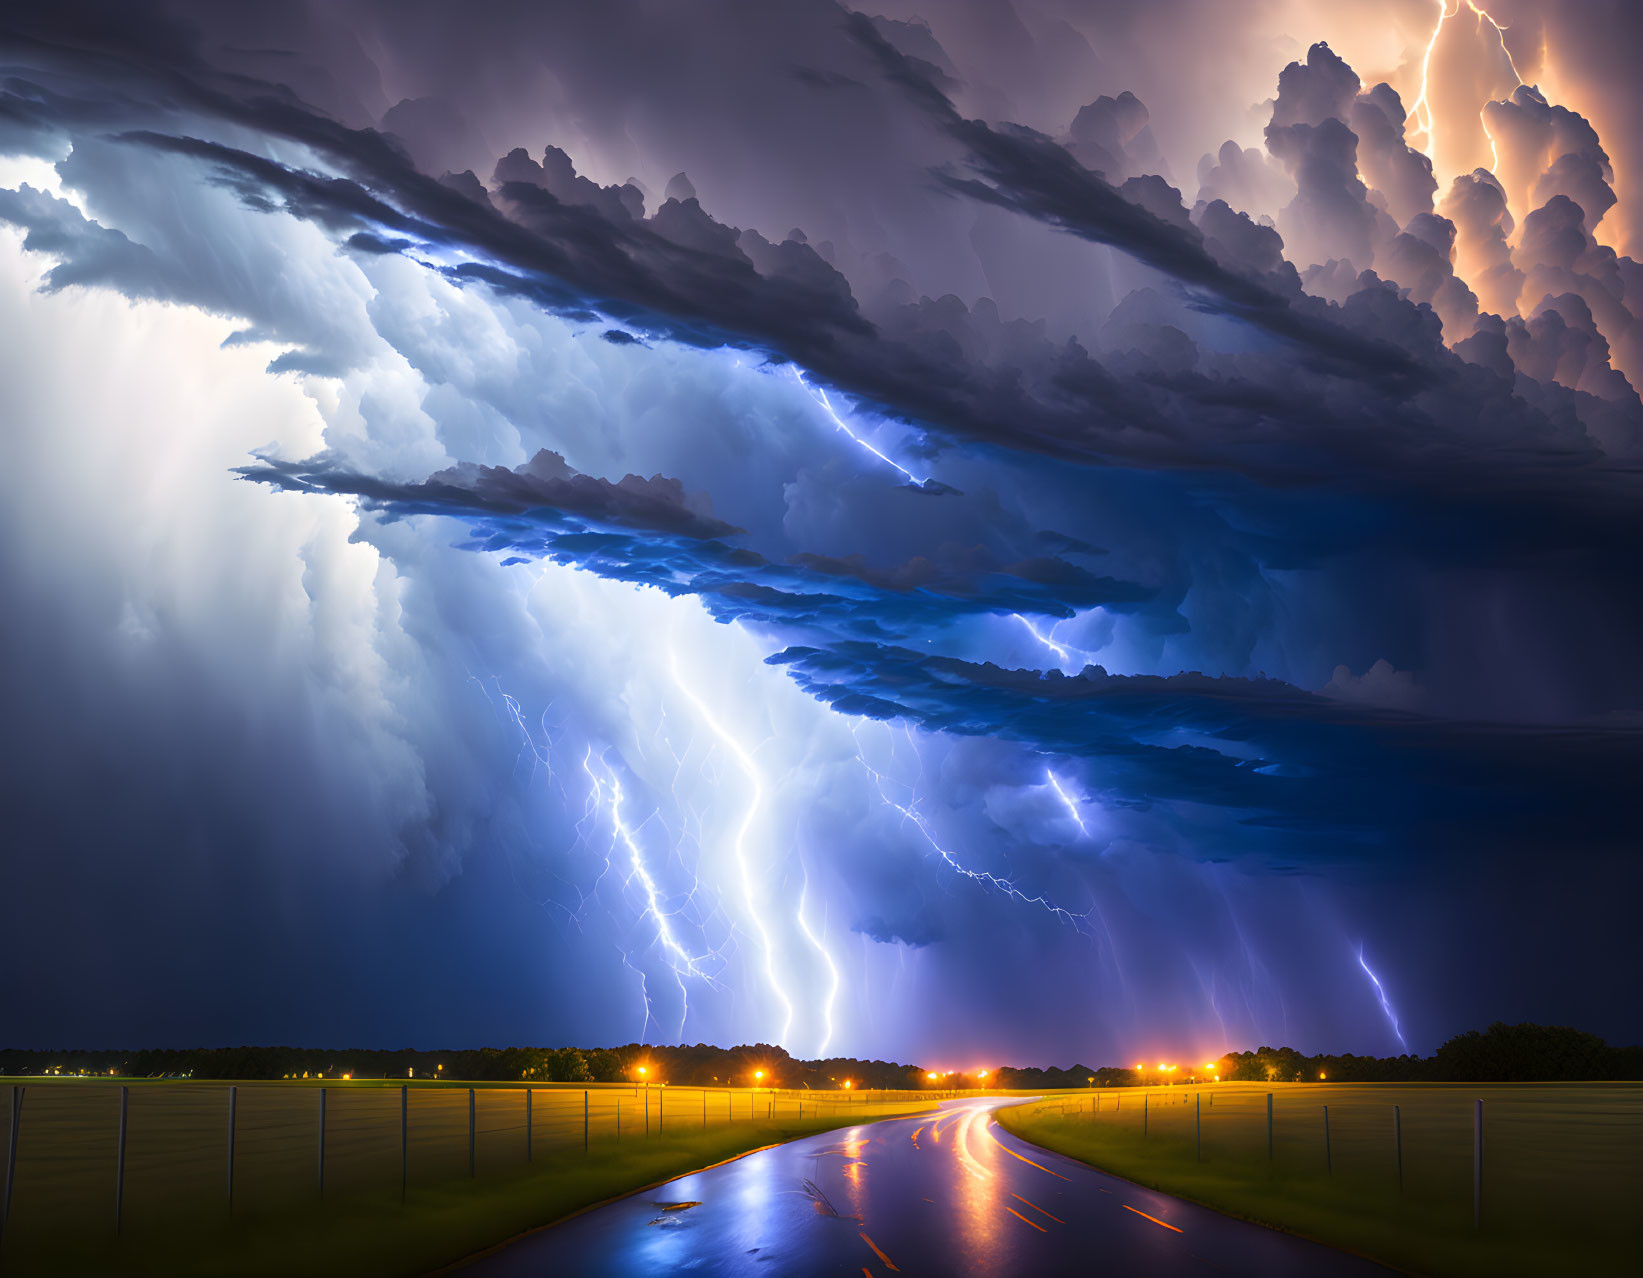 Intense lightning storm over wet road in dramatic scene